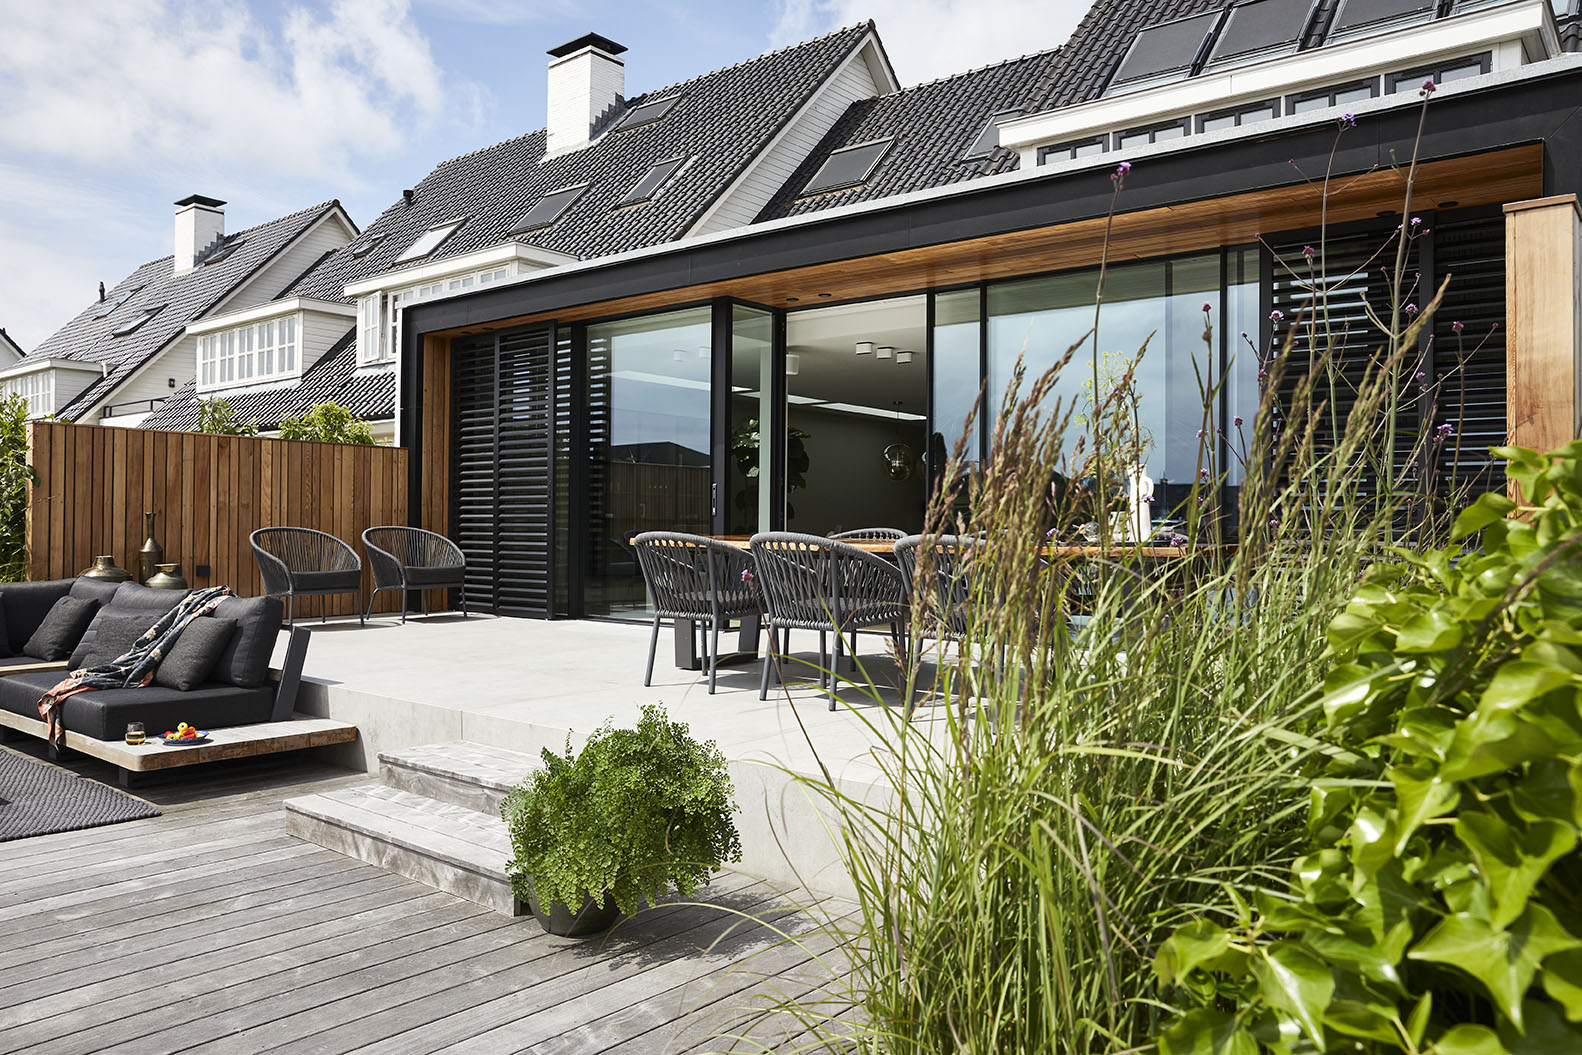 ENZO architectuur N interieur - Haarlemmermeer - Silo - Burgerveen - verbouw - villa - wonen in vier seizoenen